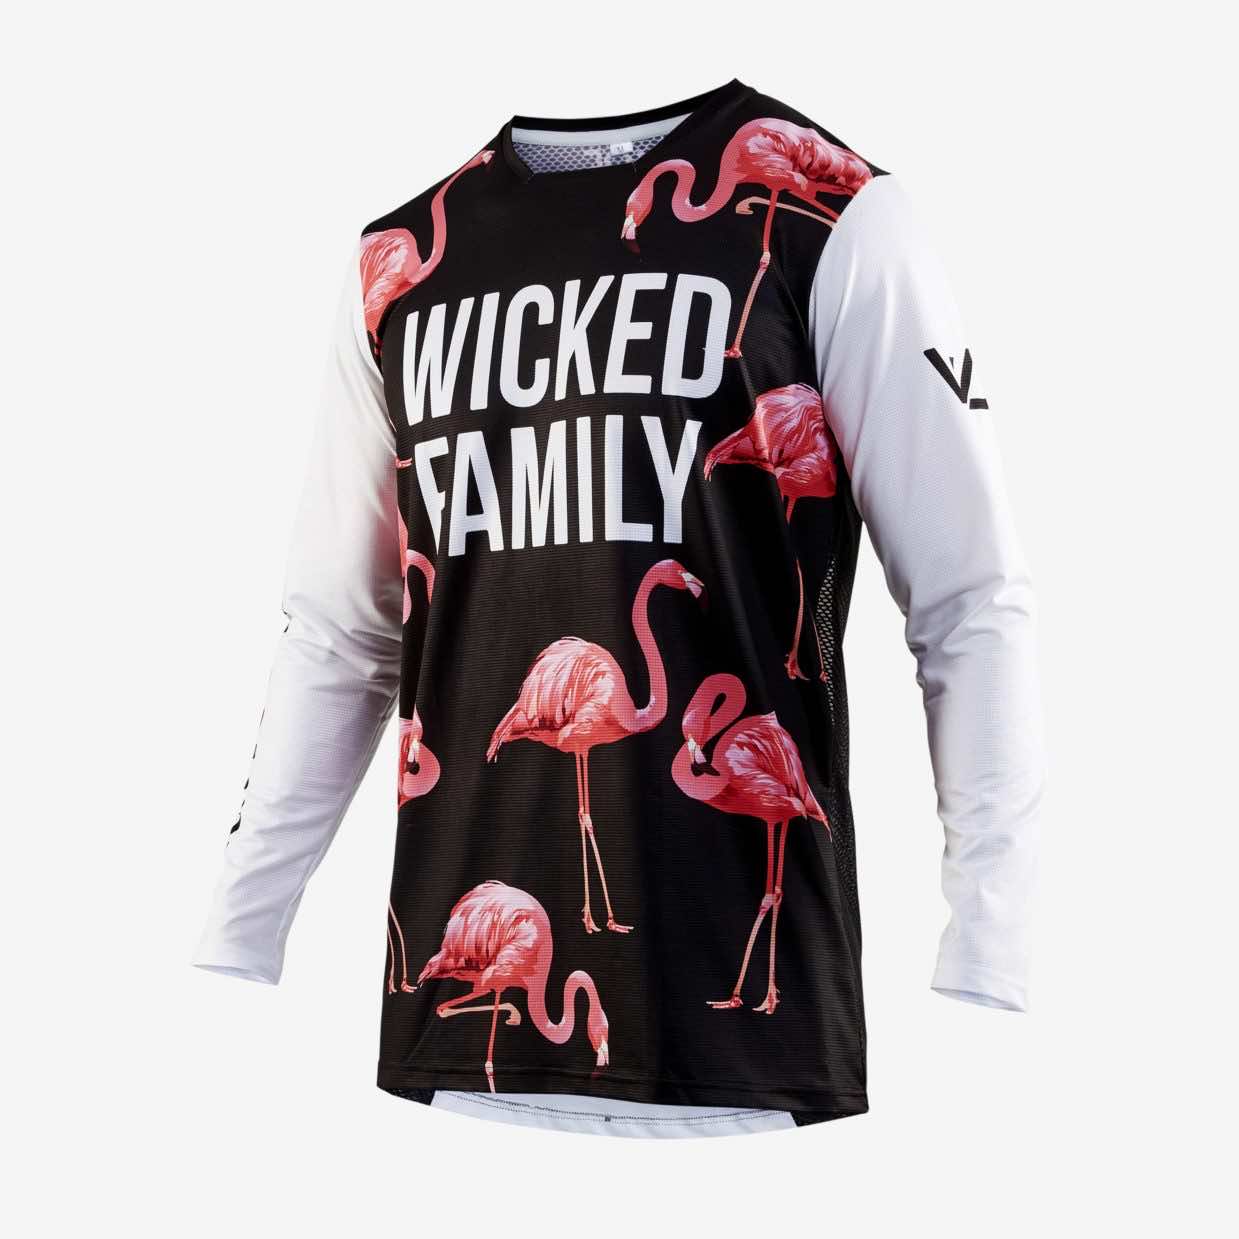 wicked family mx gear